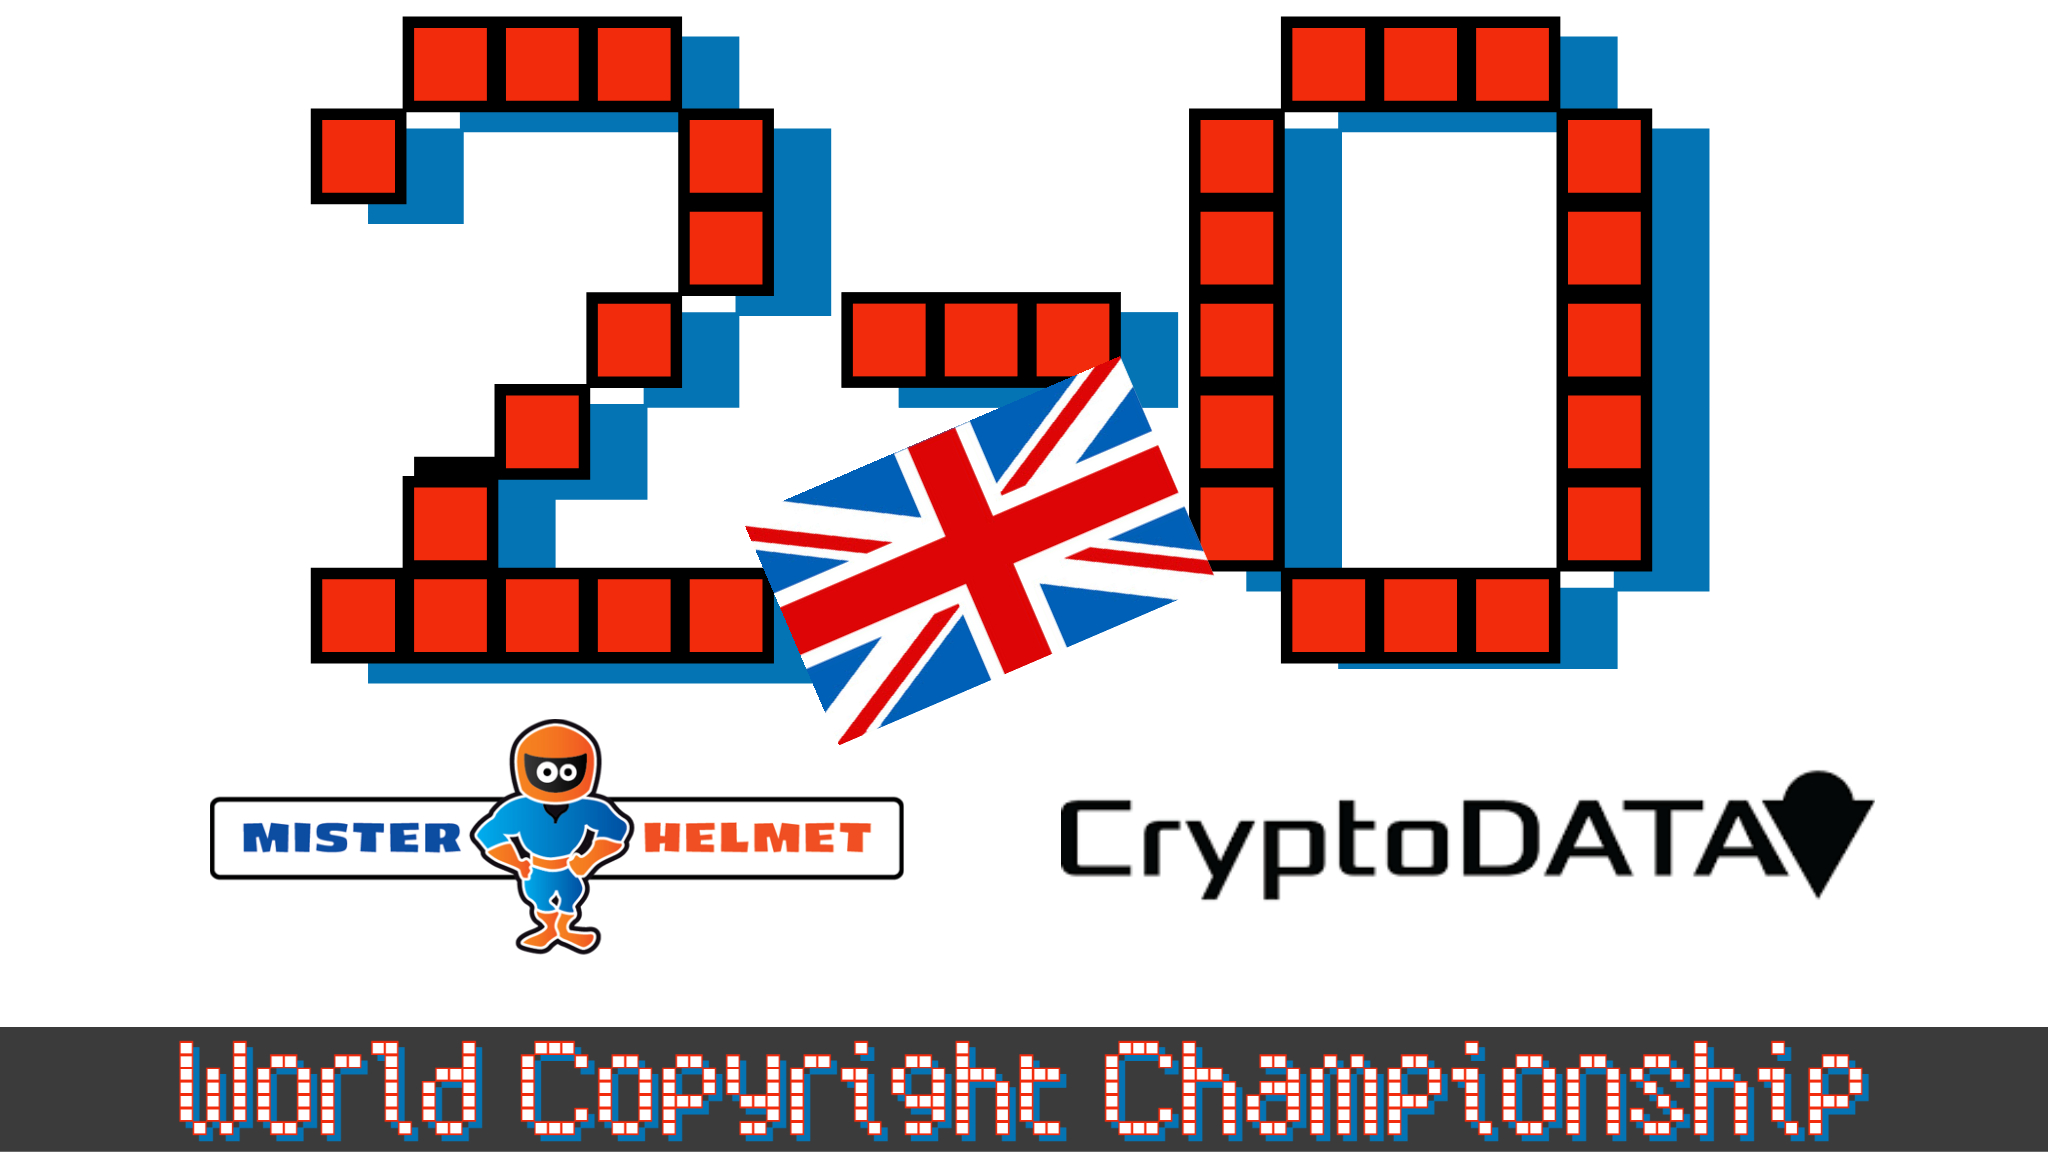 Copyright Infringement Claim by Cryptodata: DISMISSED! – Misterhelmet